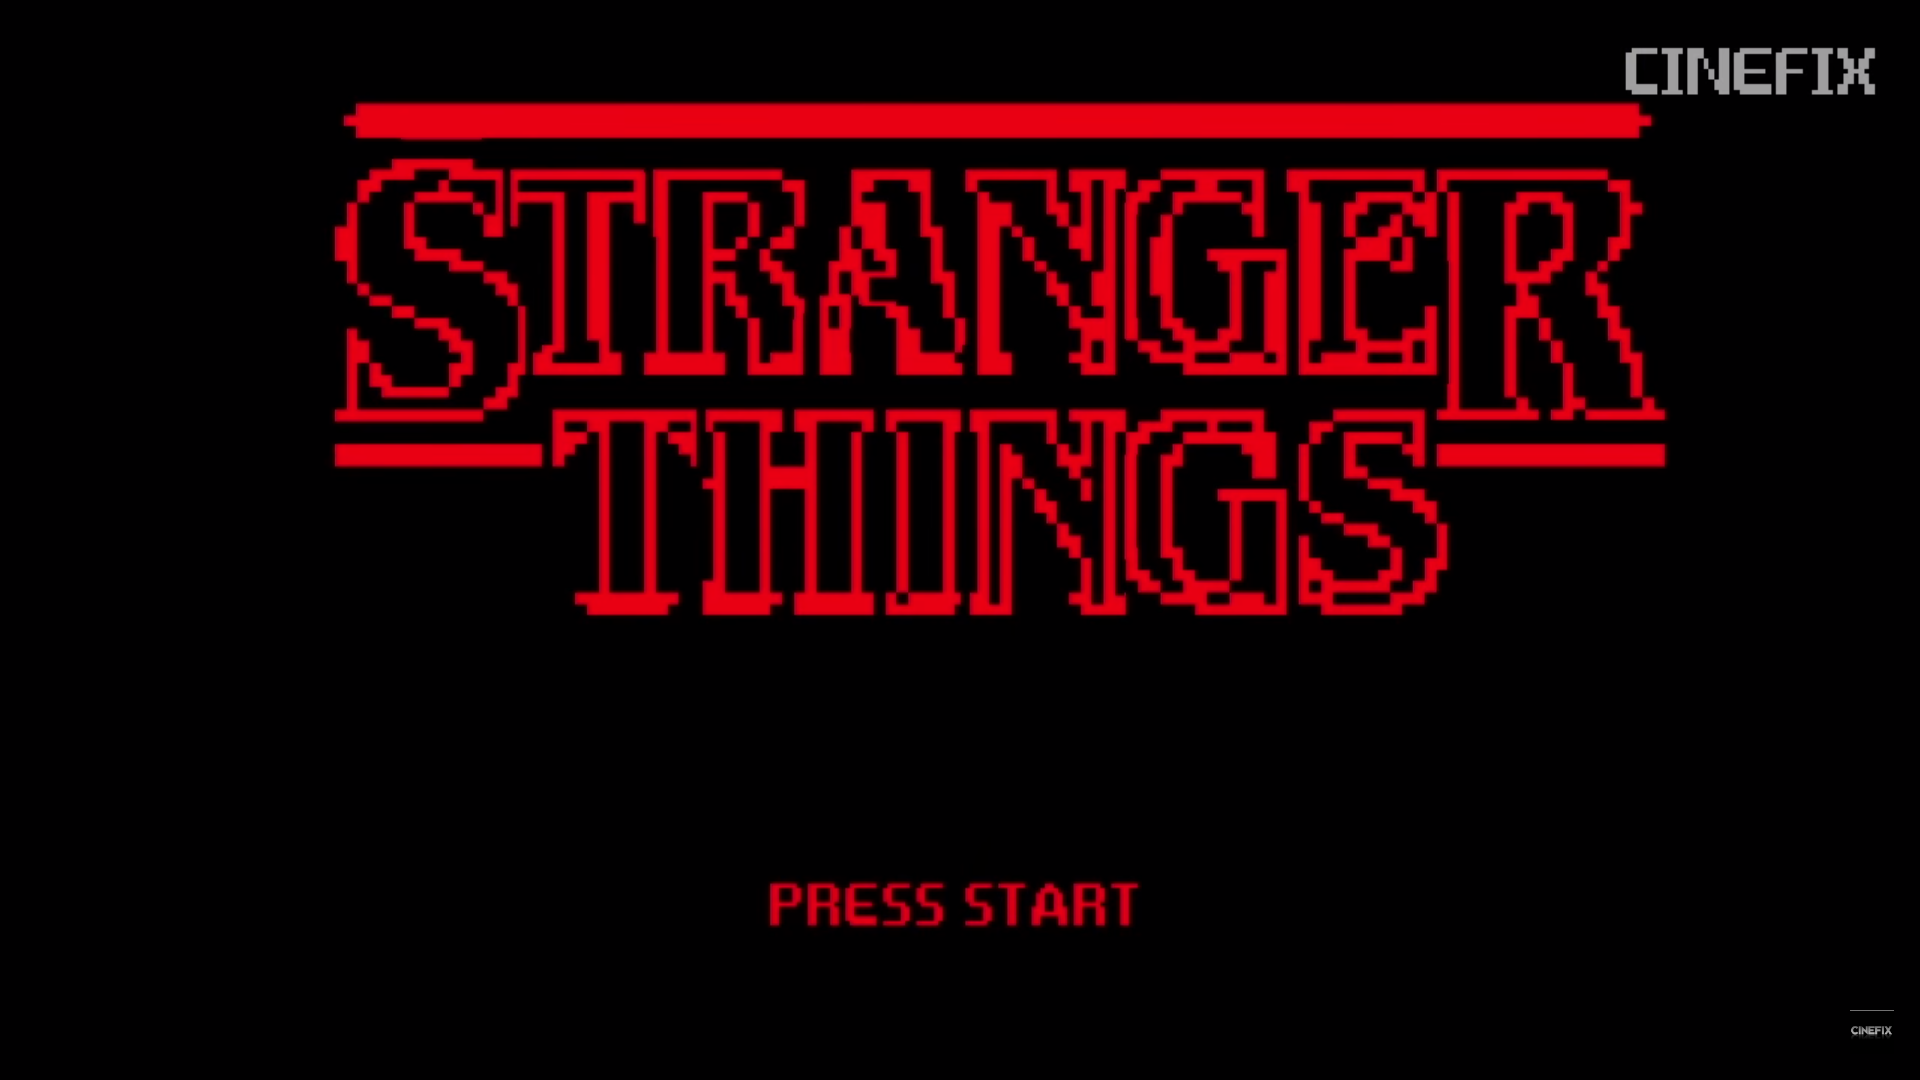 Image for Stranger Things gets an 8-bit videogame makeover courtesy of 8-bit Cinema